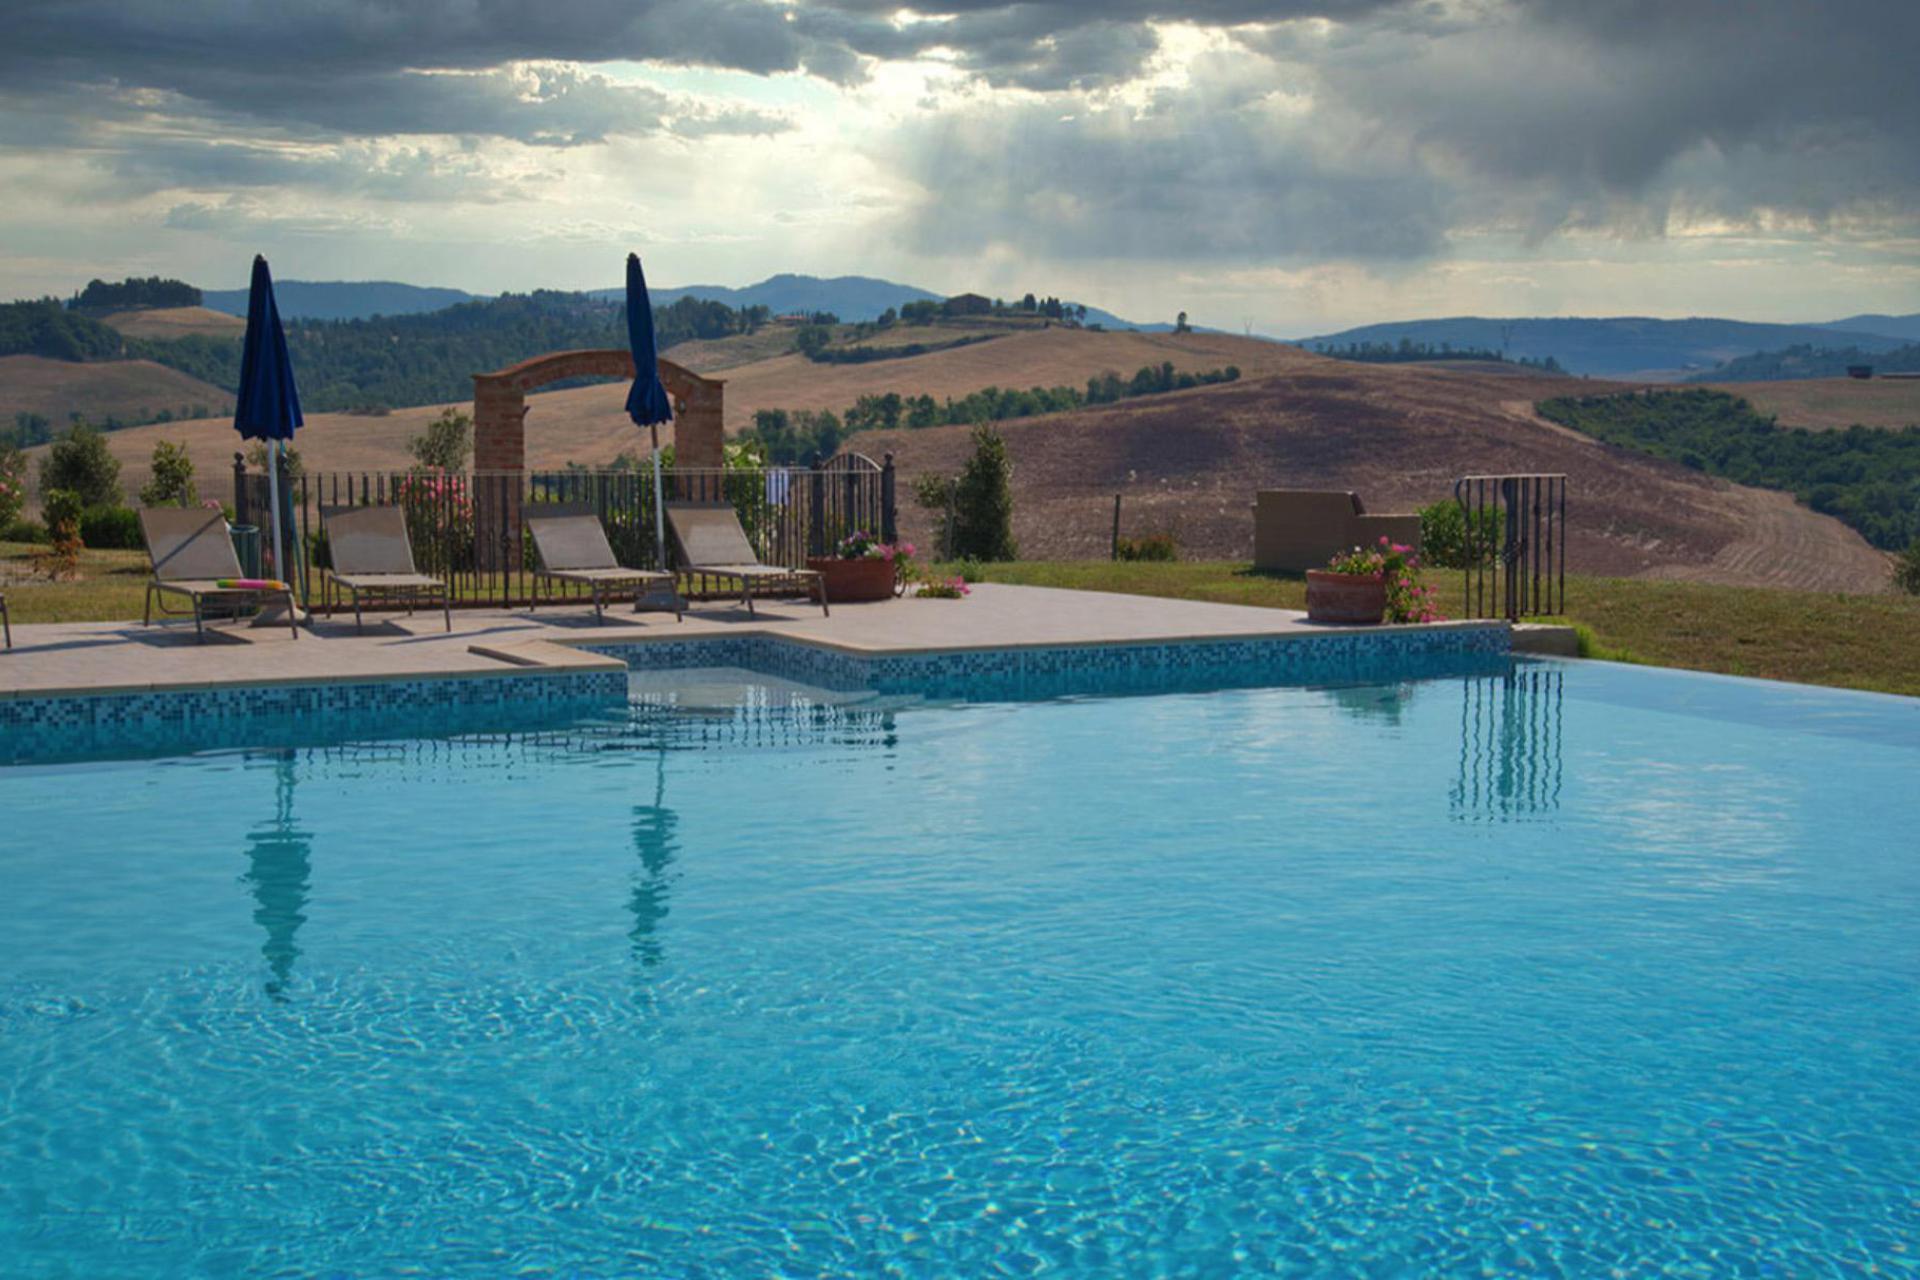 Agriturismo per famiglie in Toscana con bella piscina